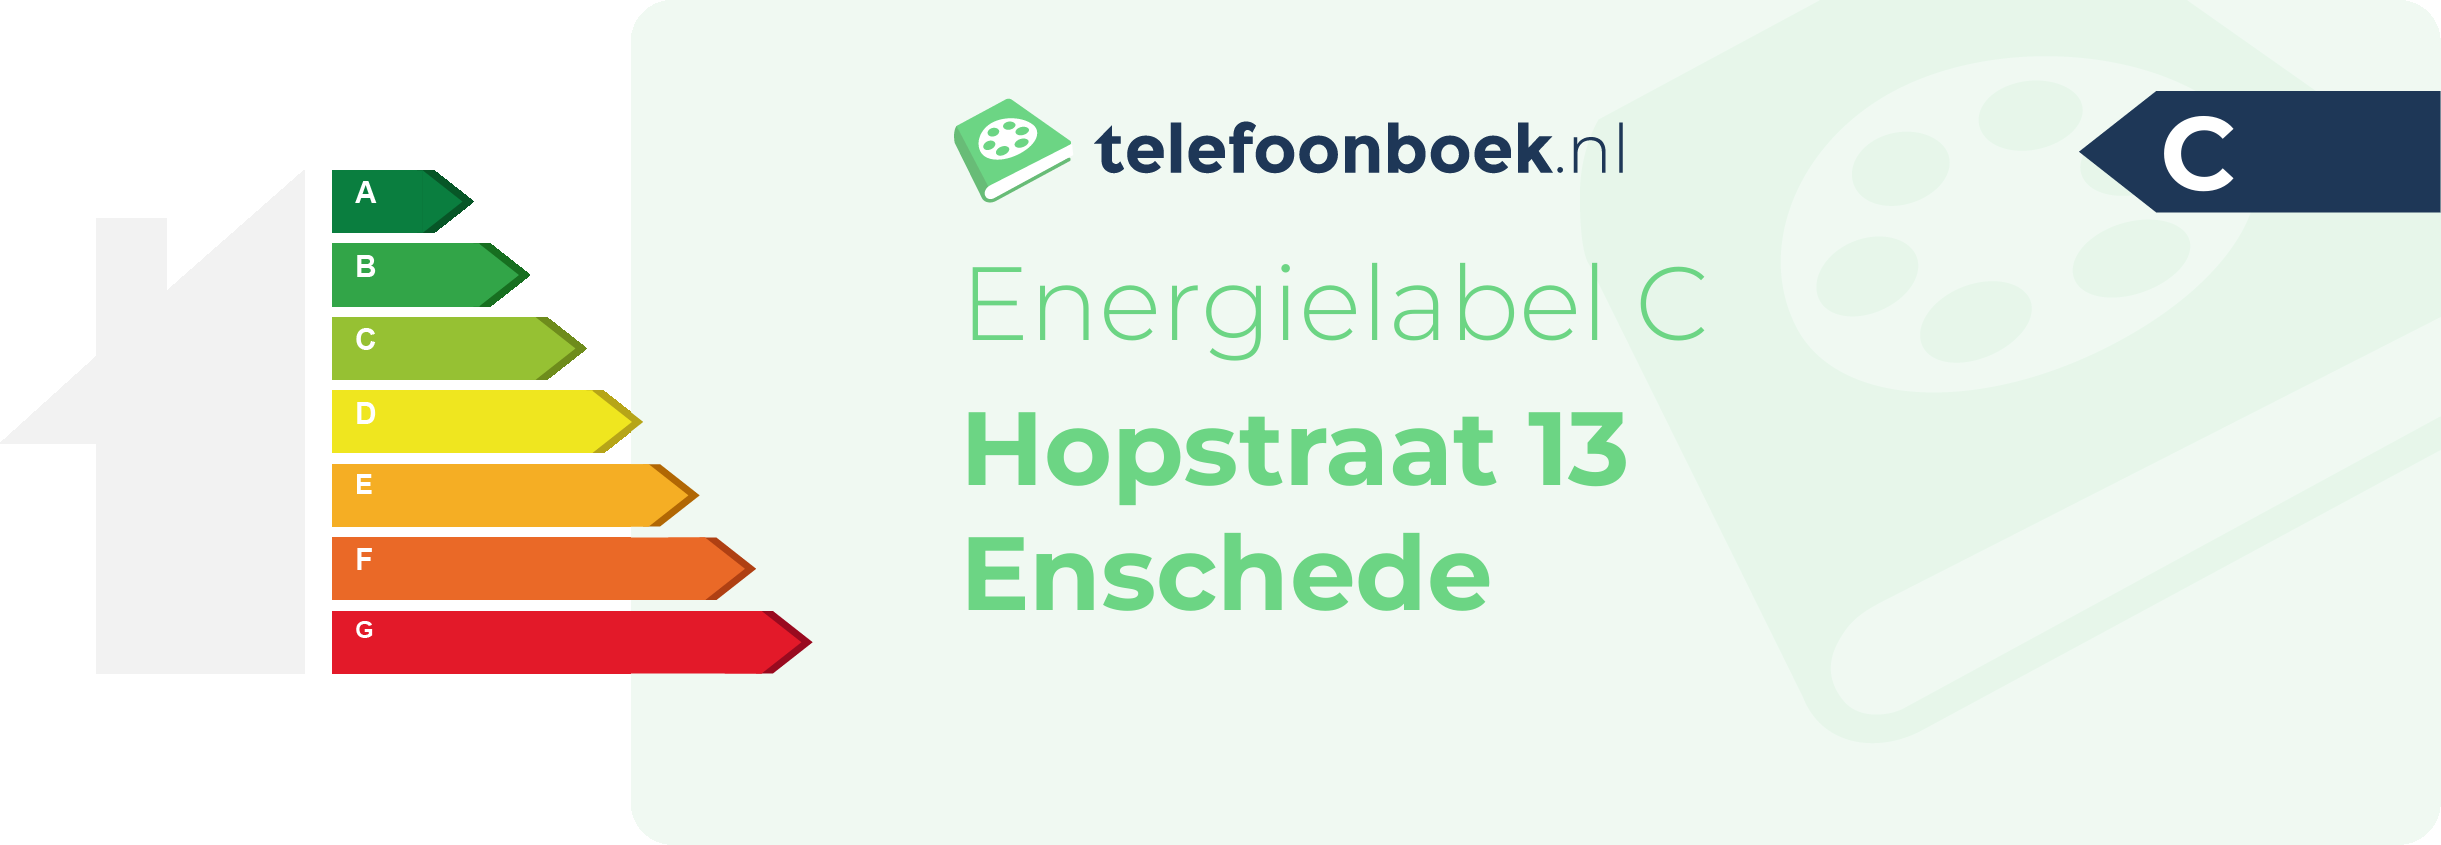 Energielabel Hopstraat 13 Enschede